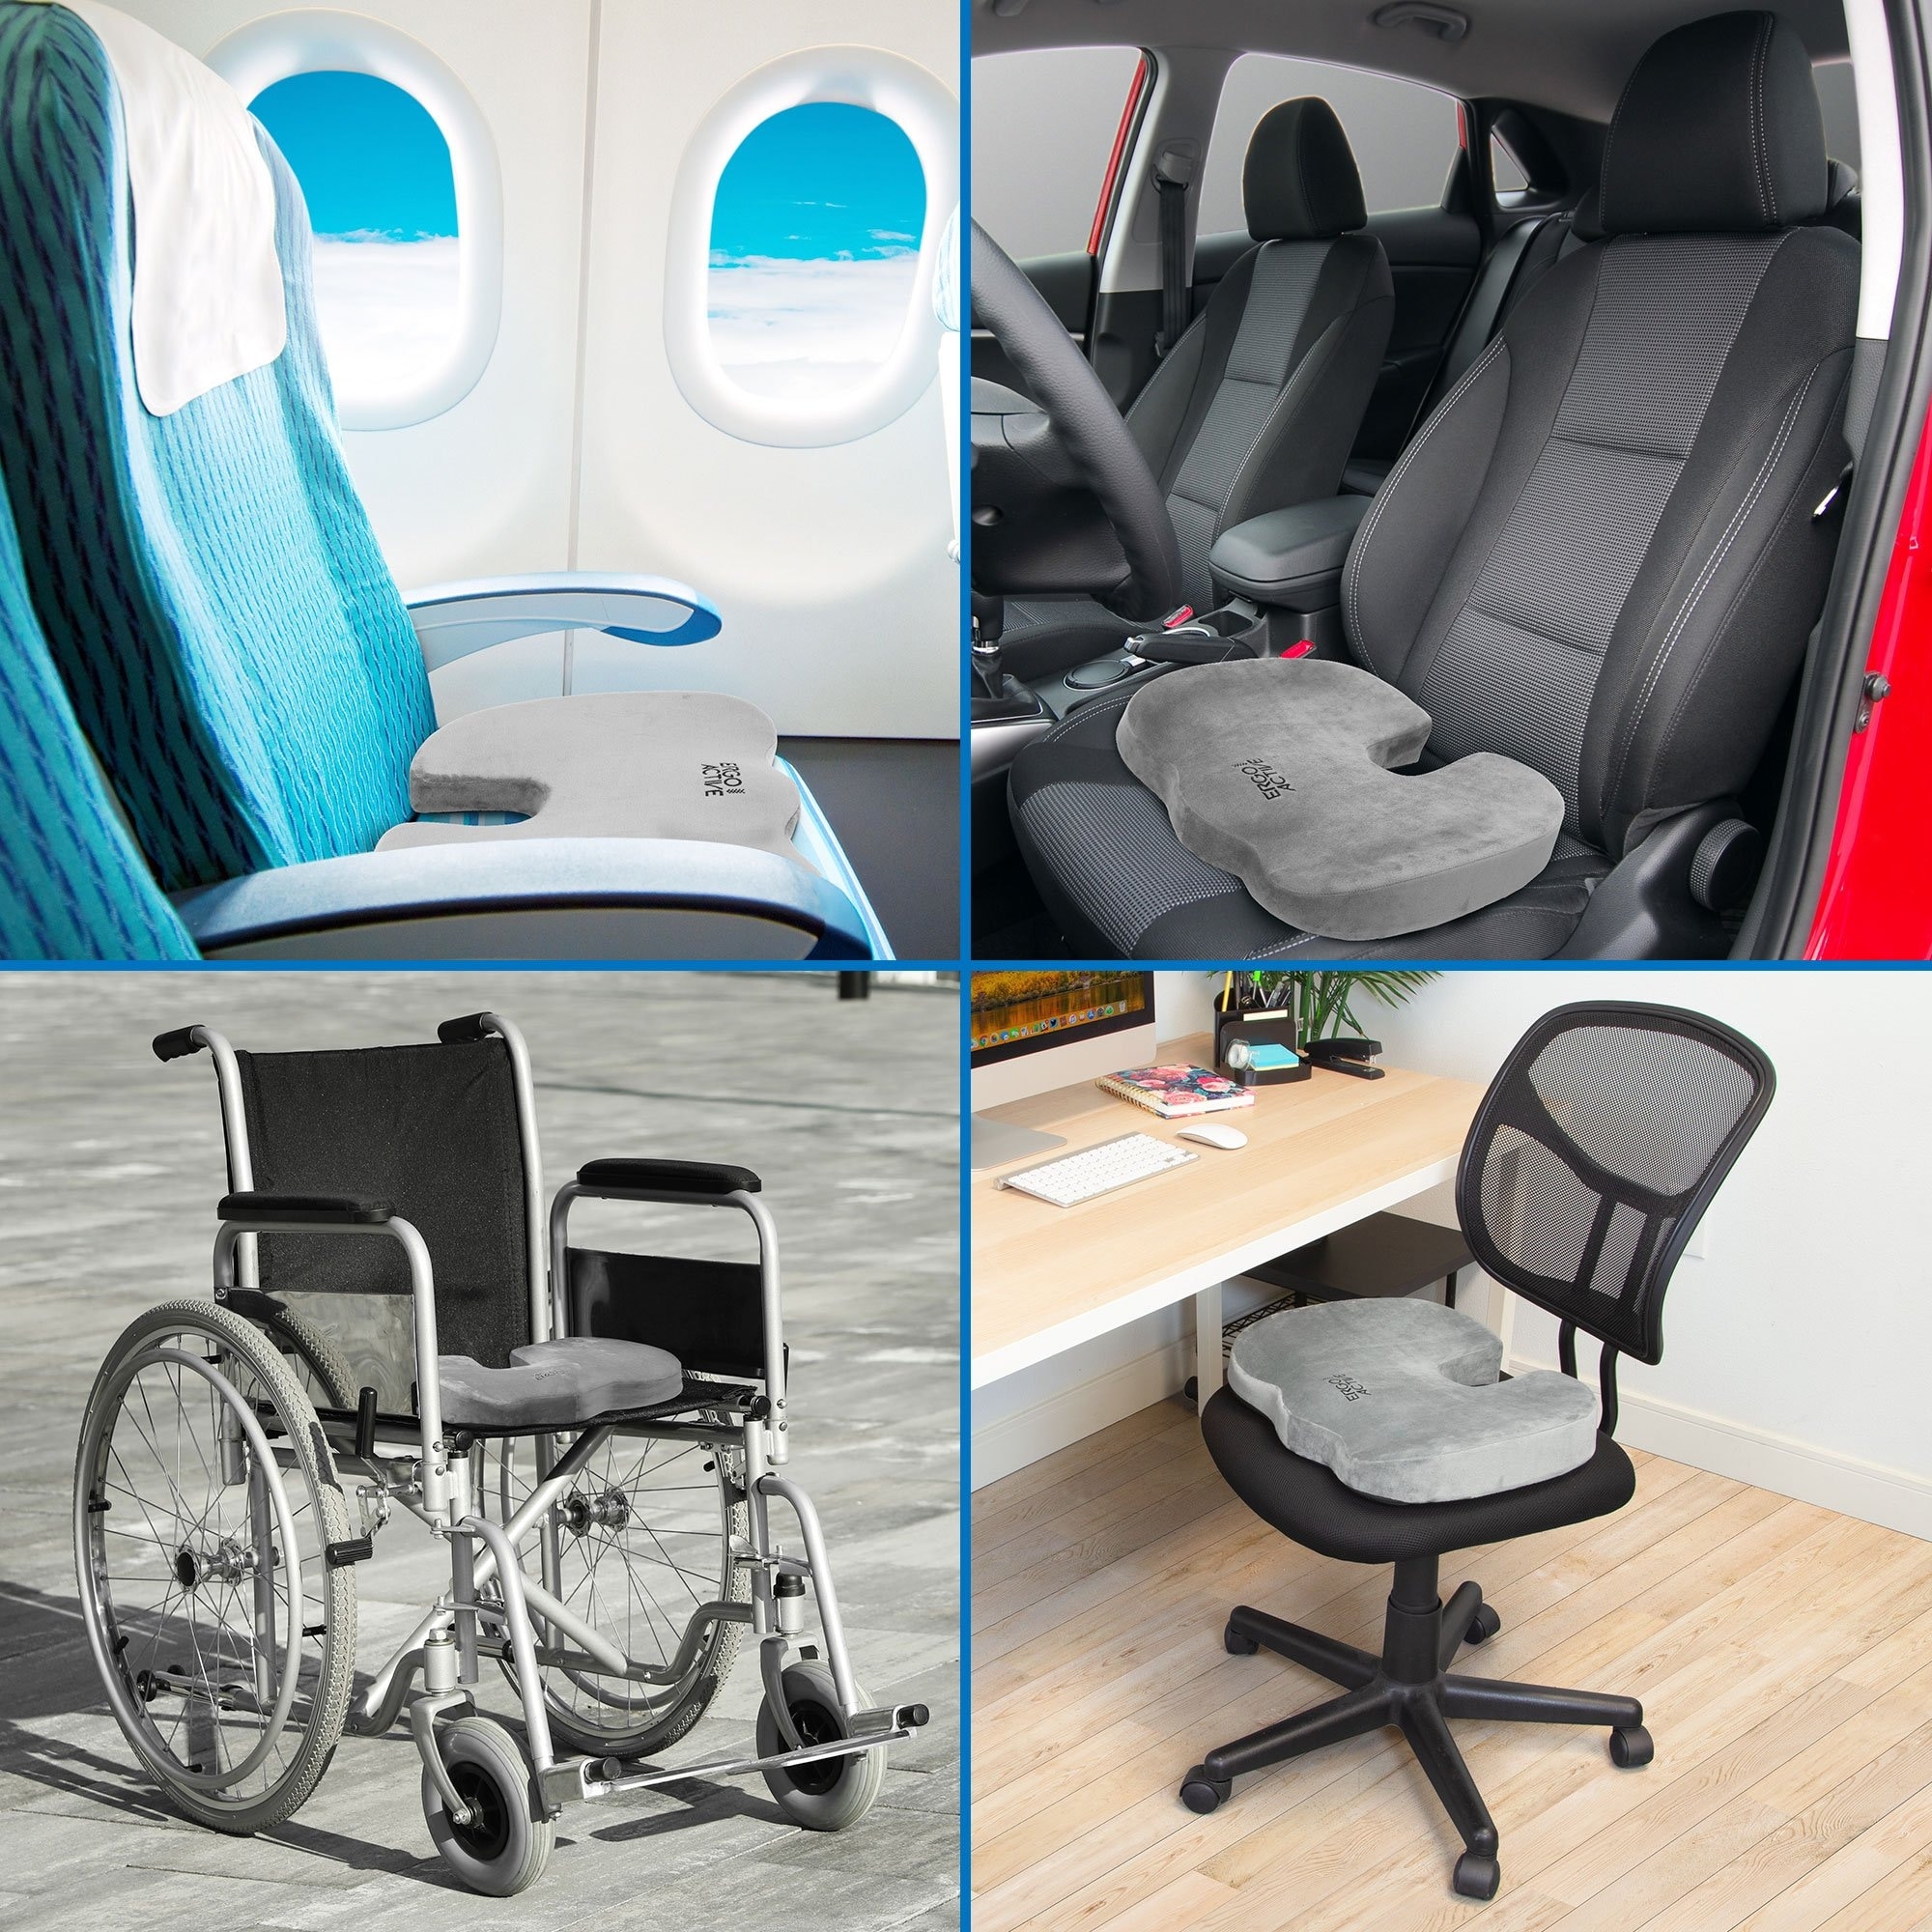 Comfilife Gel Enhanced Seat Cushion - Non-Slip Orthopedic Gel & Memory Foam  Cocc